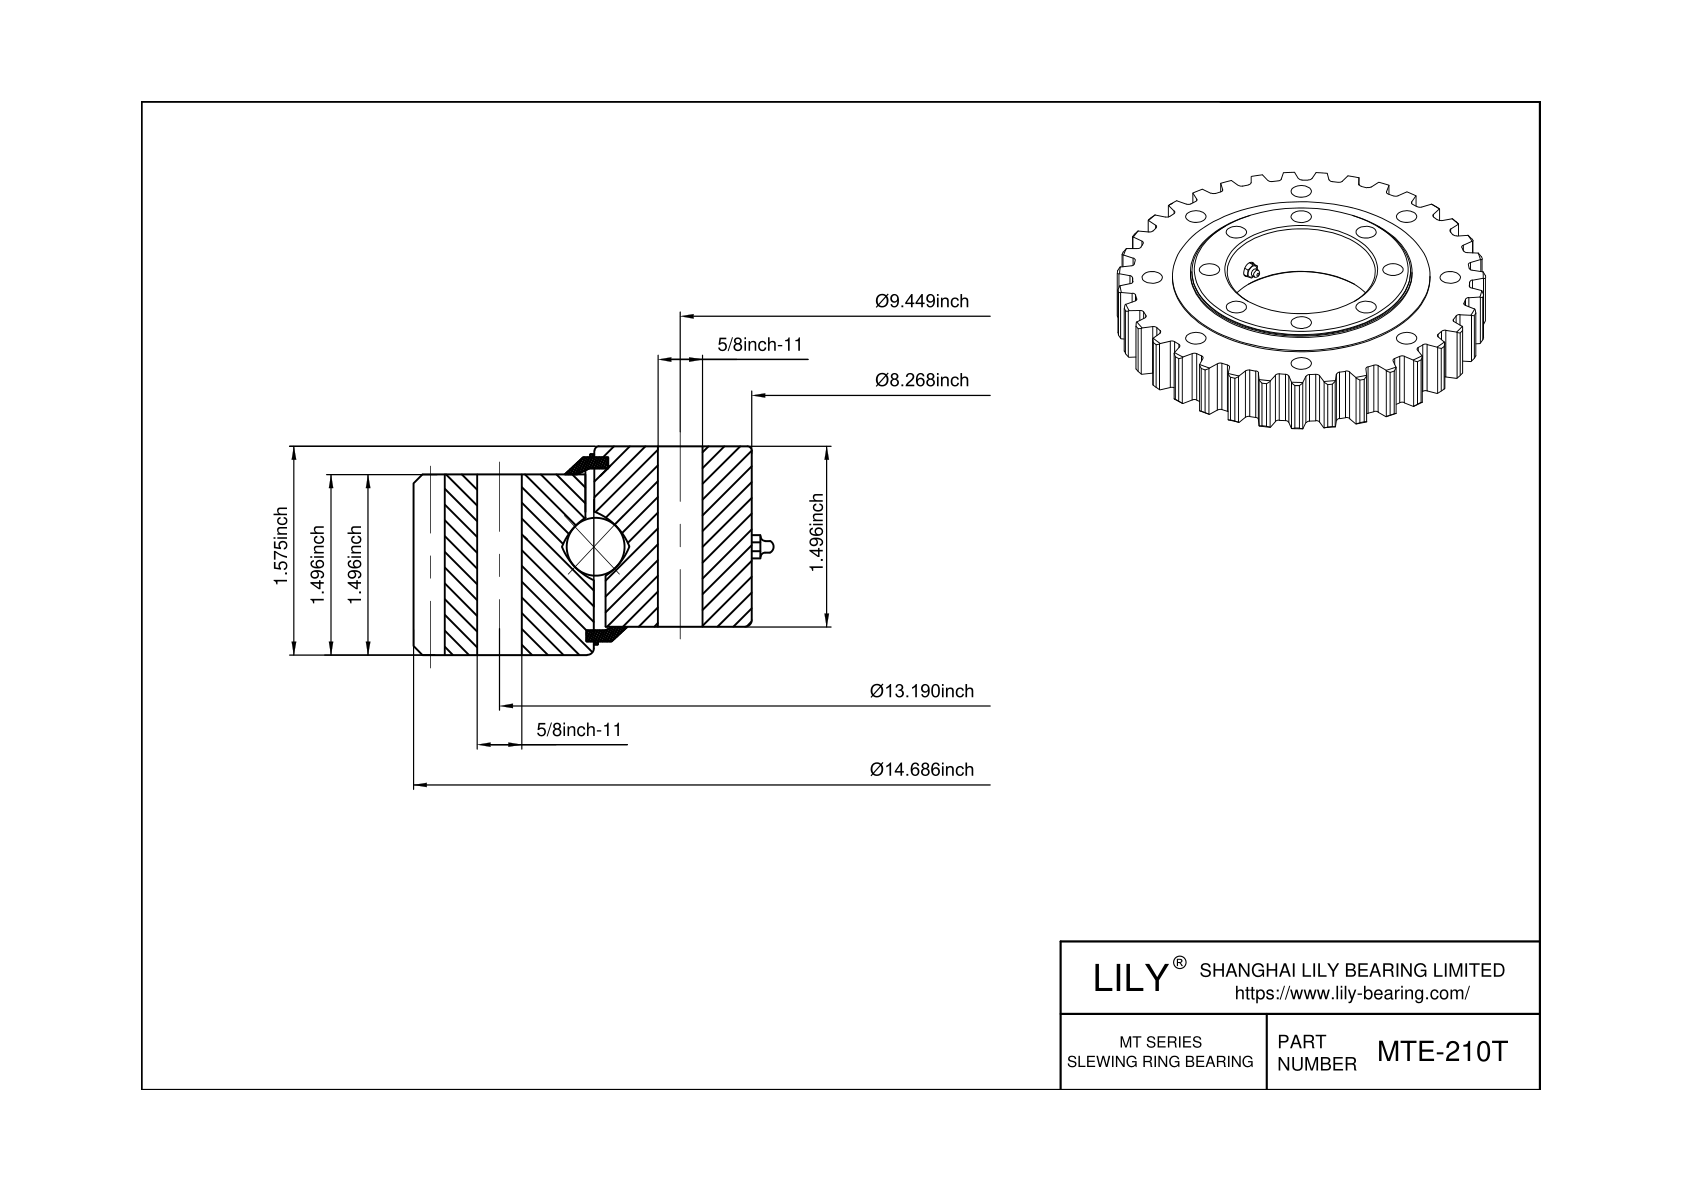 MTE-210T MT Series cad drawing